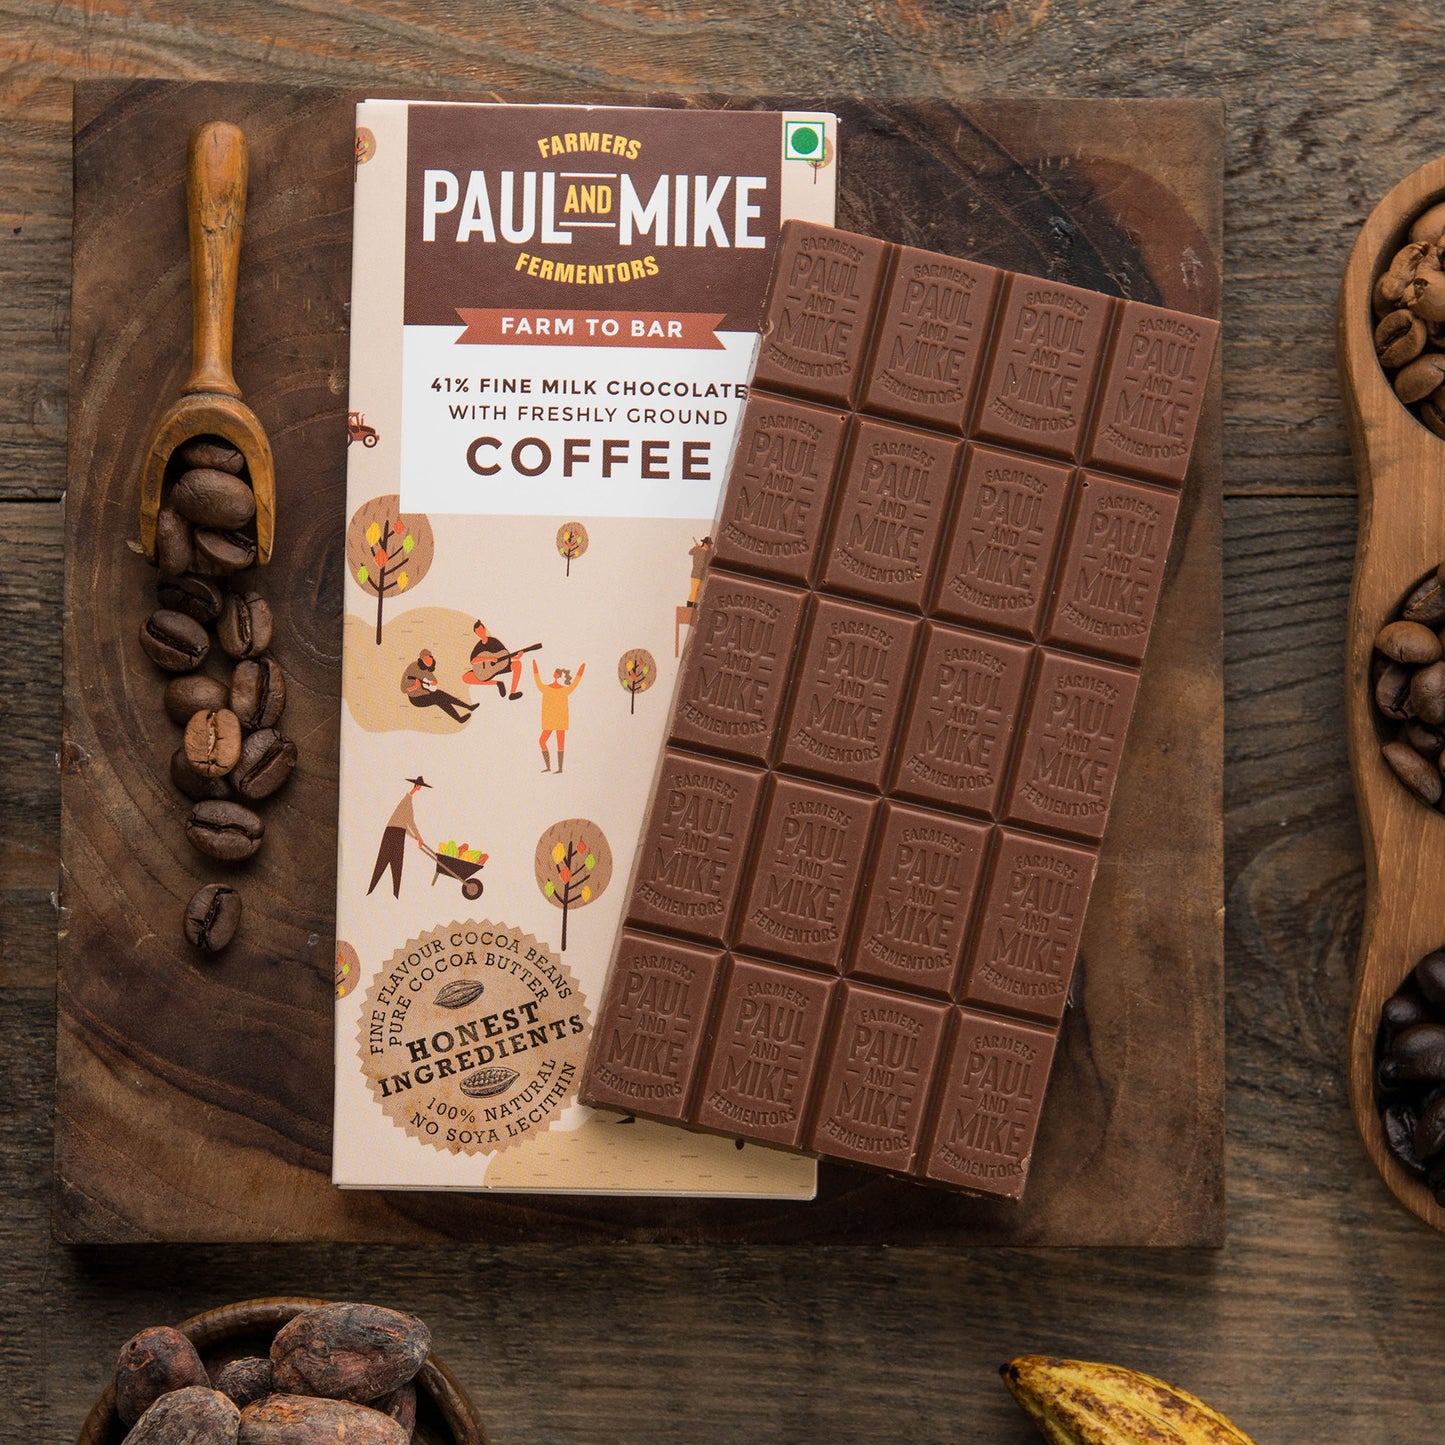 
                  
                    Paul And Mike Milk Chocolate Combo- Coffee & Alphonso Mango
                  
                